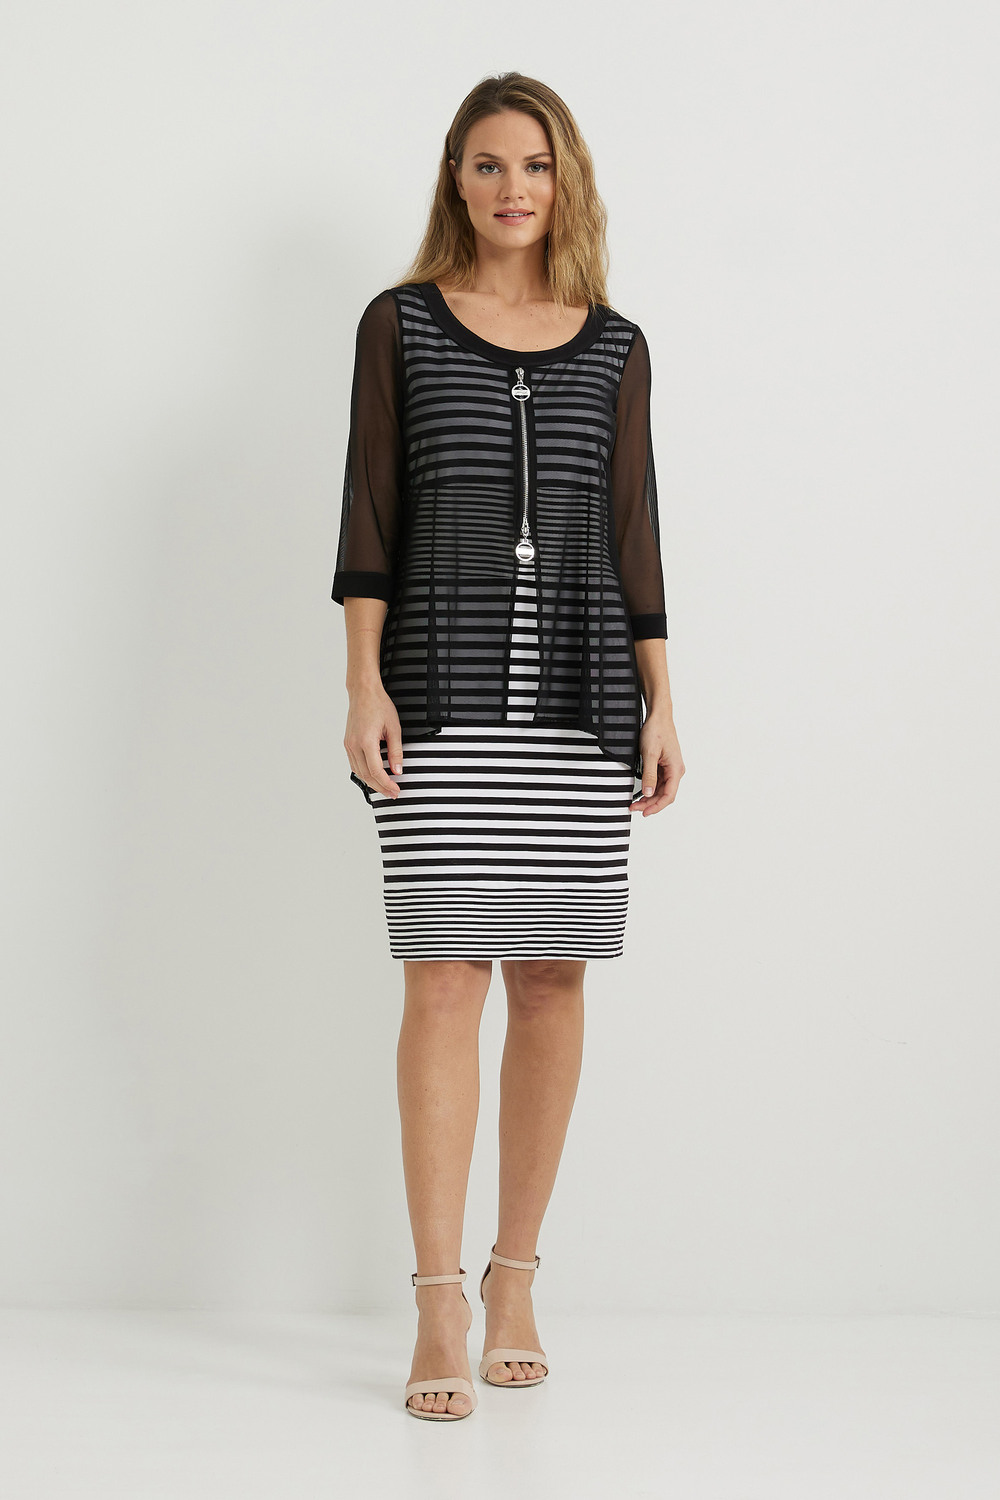 Joseph Ribkoff Sheer & Striped Dress Style 222254. Black/white